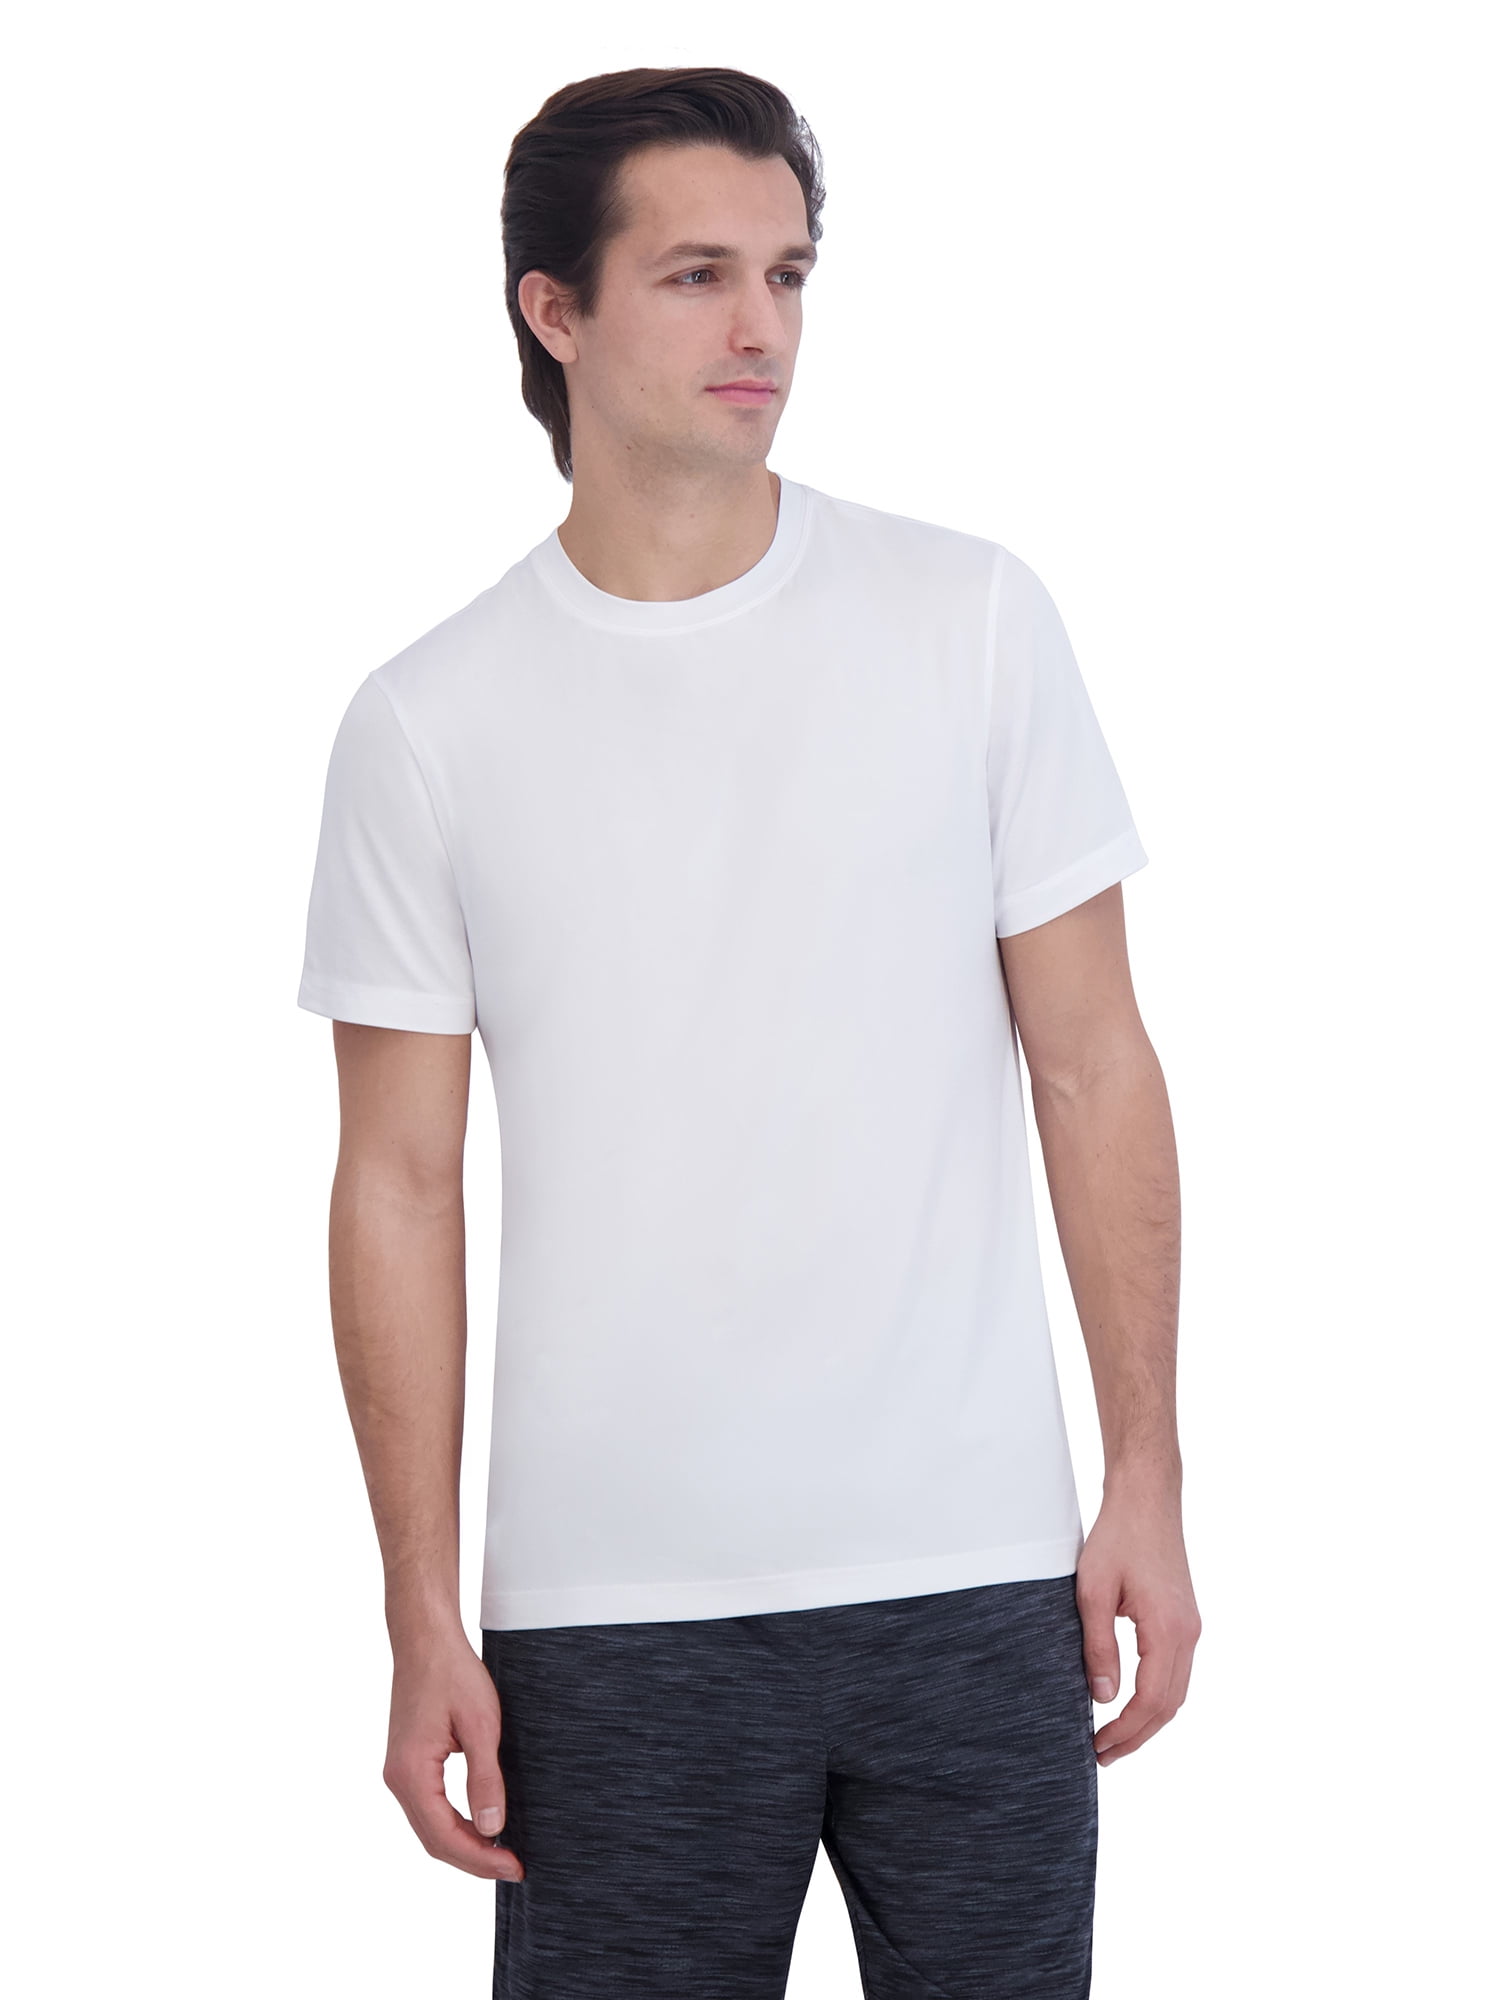 GAIAM Everyday Basic Crew T-Shirt, Men's Size M, Navy NEW MSRP $42